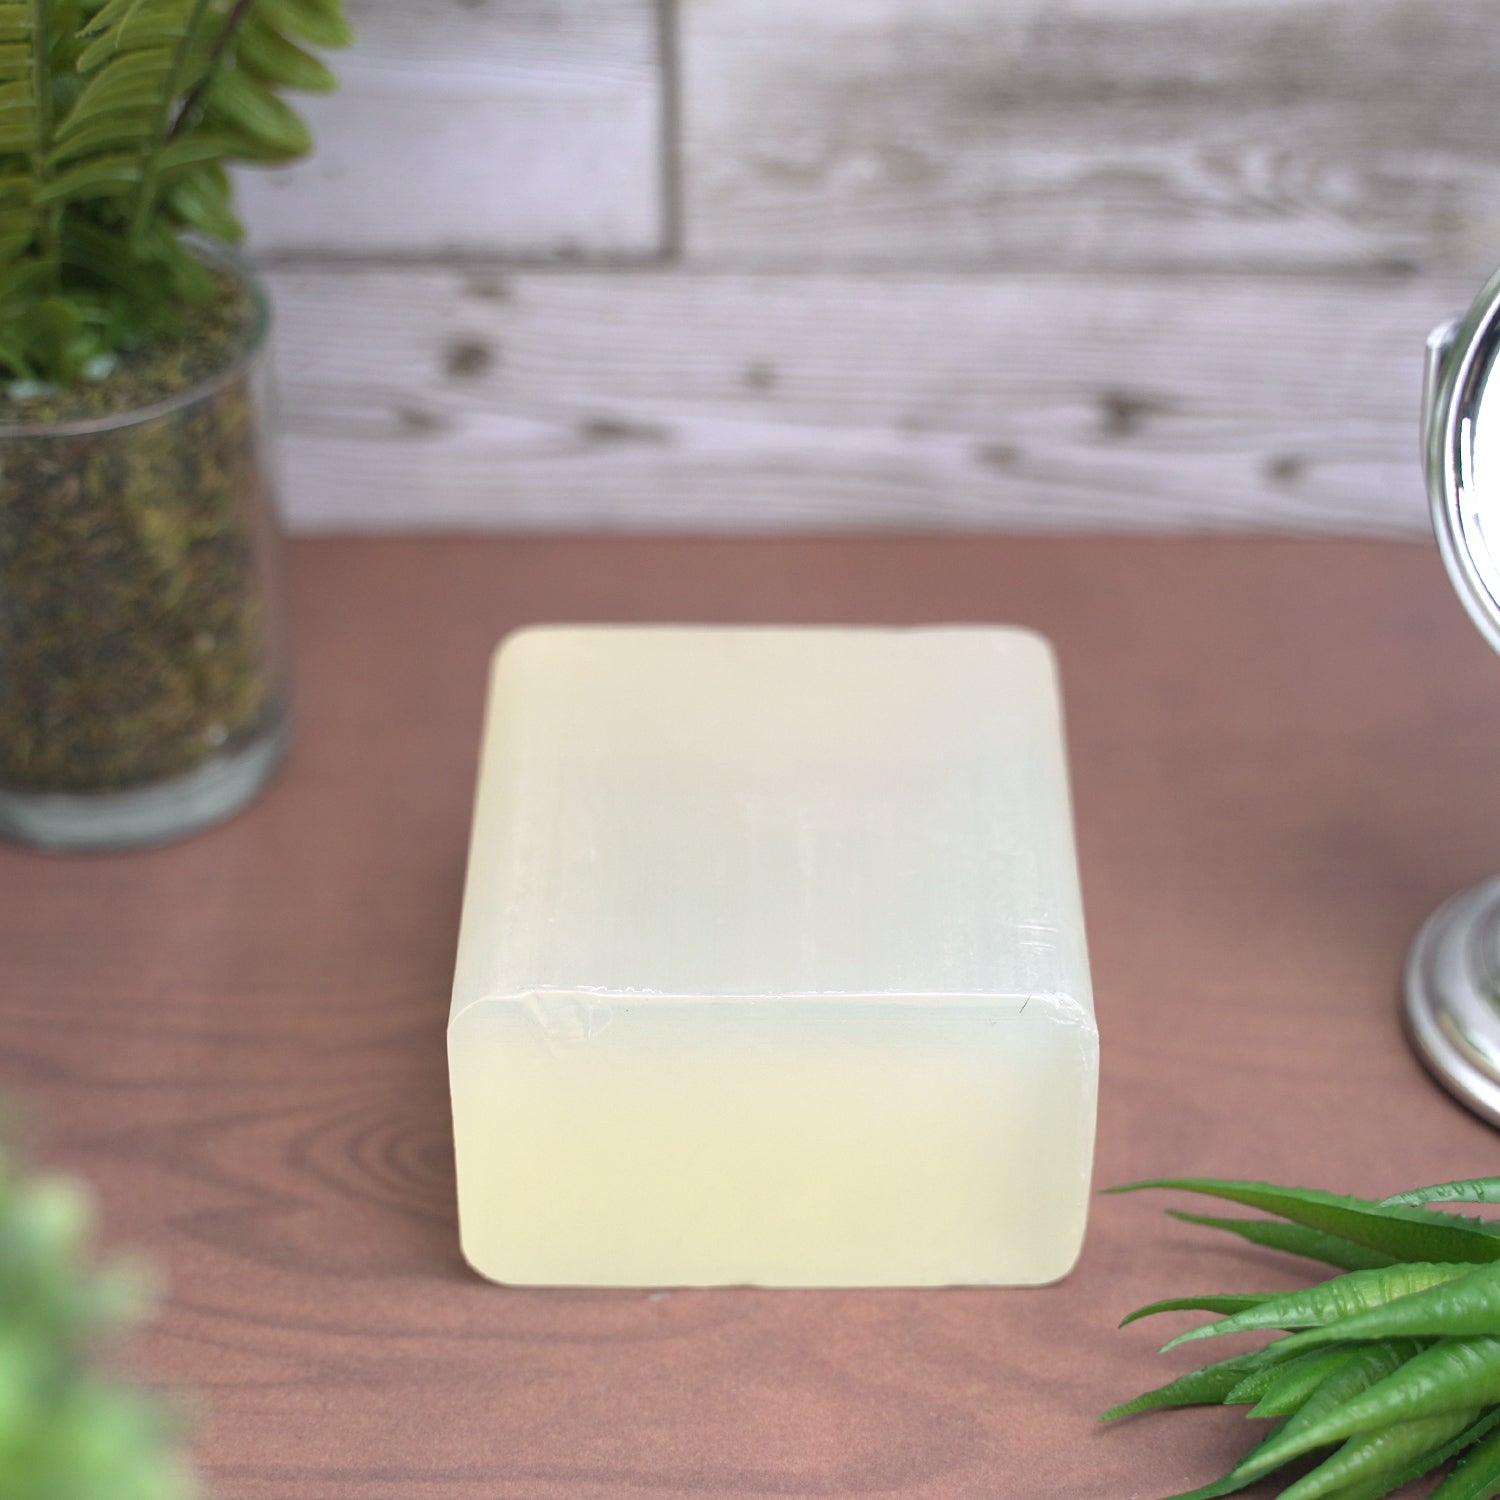 Aloe Vera Natural Soap Base for Soap Makers